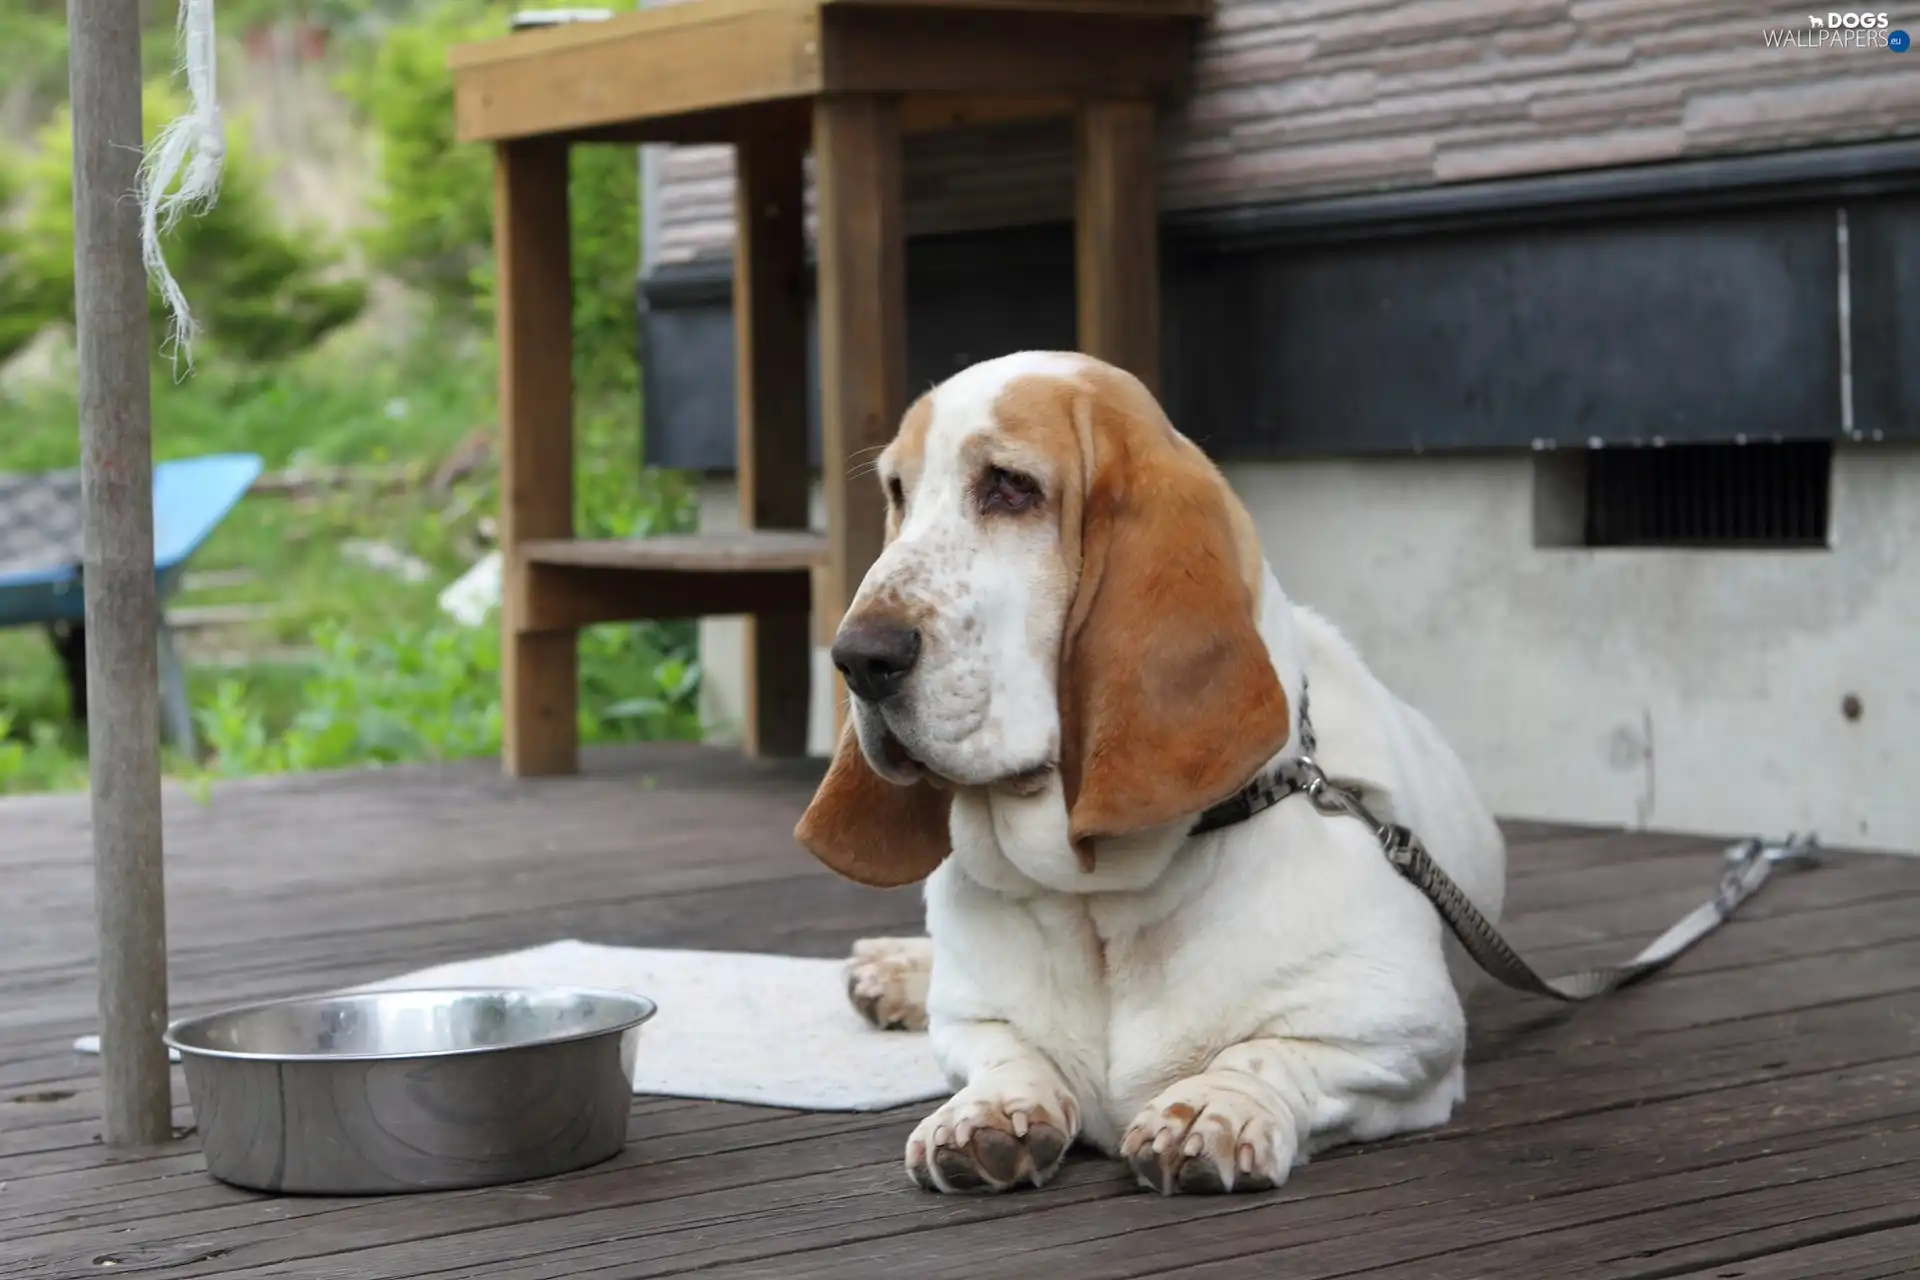 Leash, bowl, dog, terrace